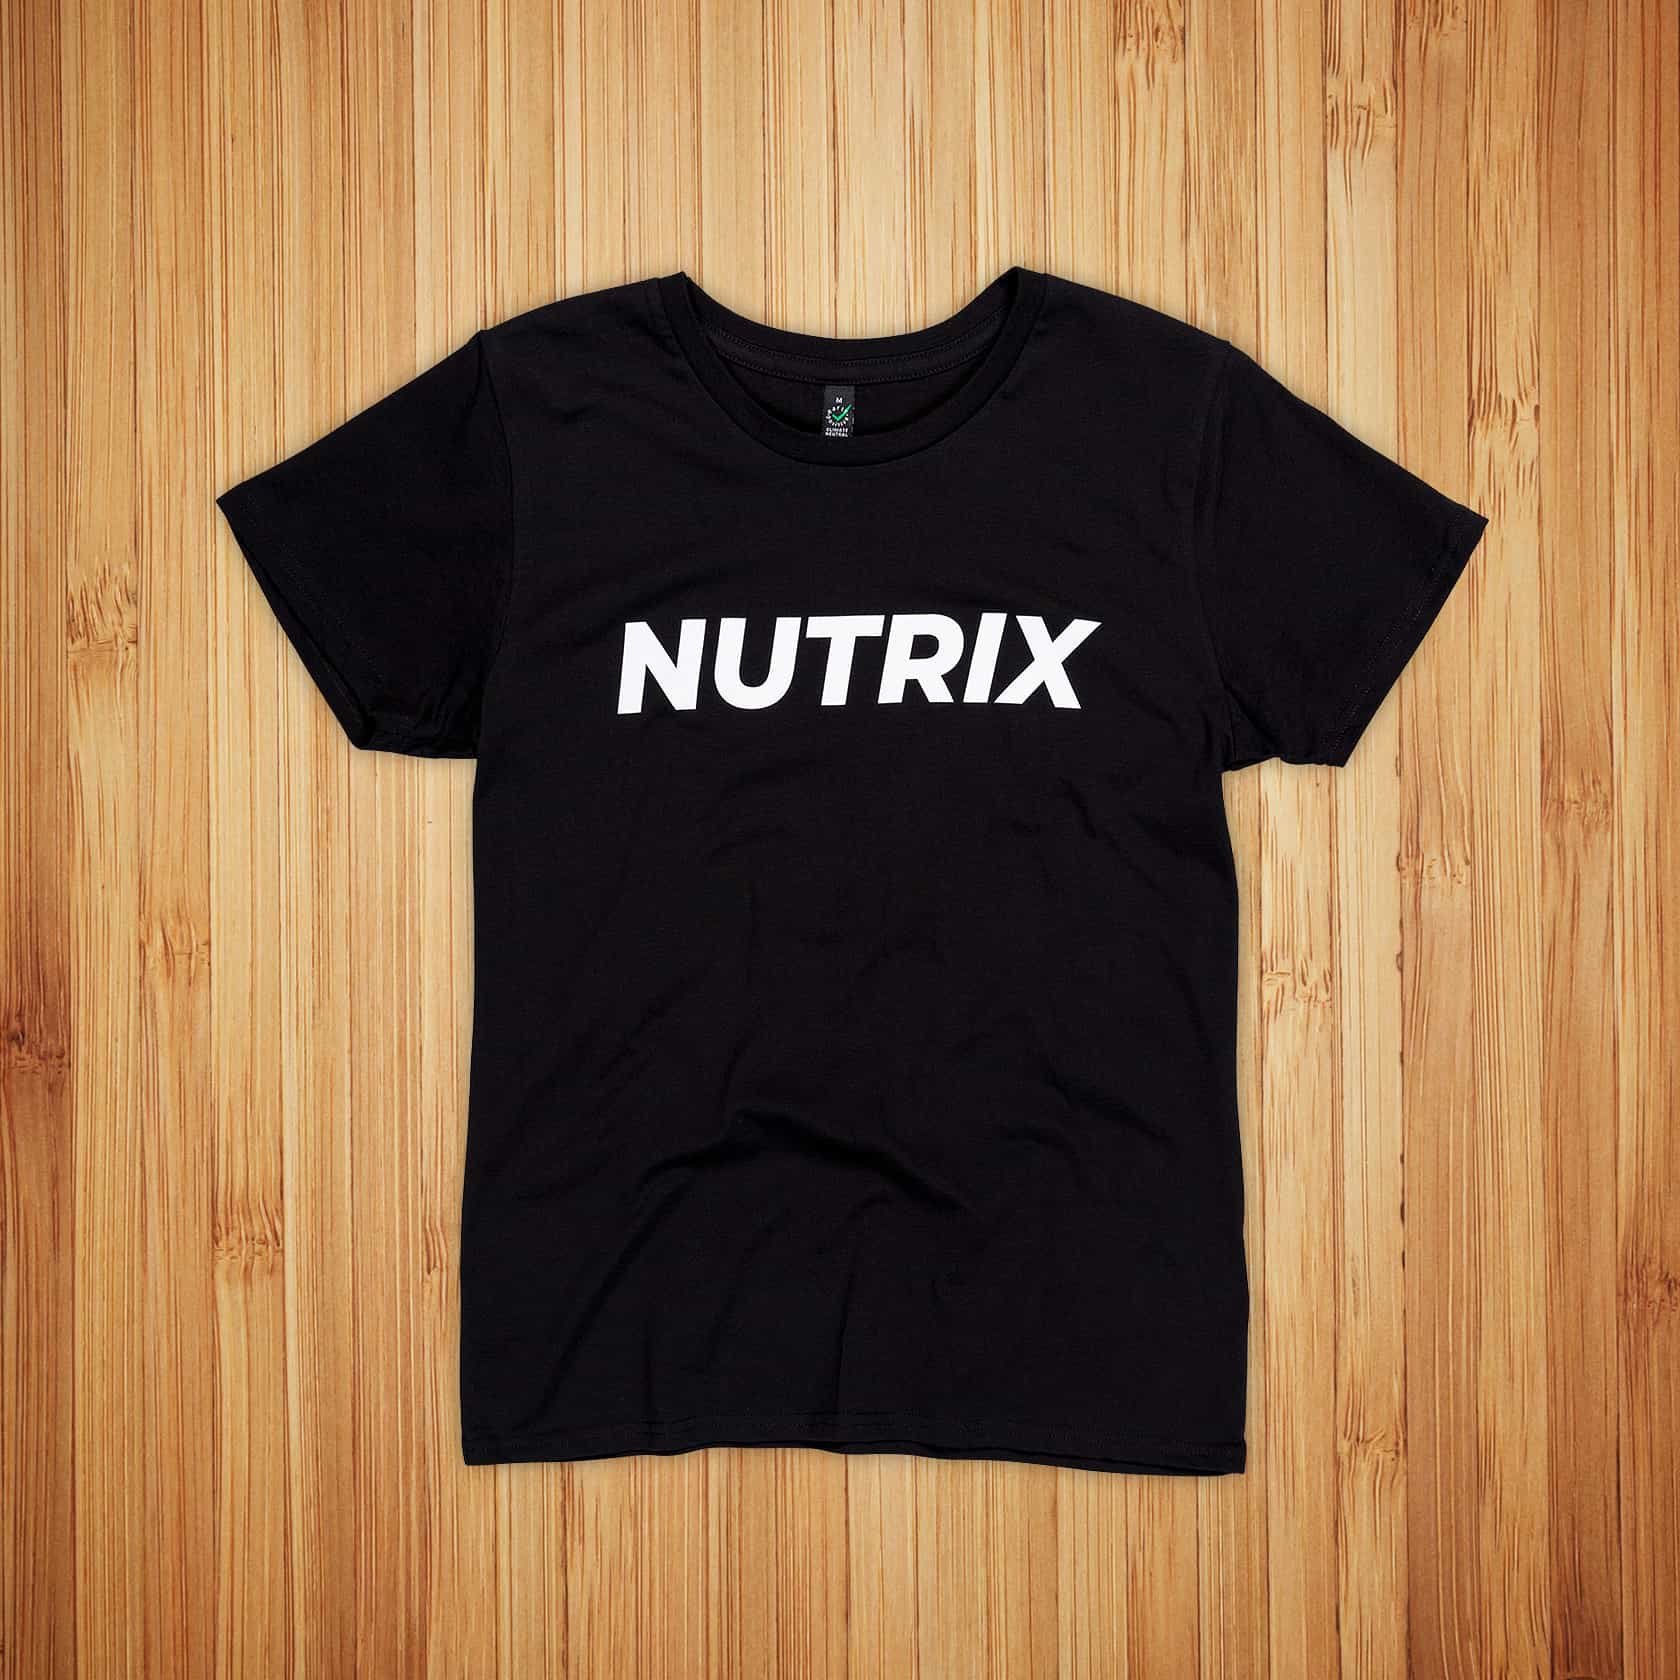 T-paidat painatuksella Nutrix